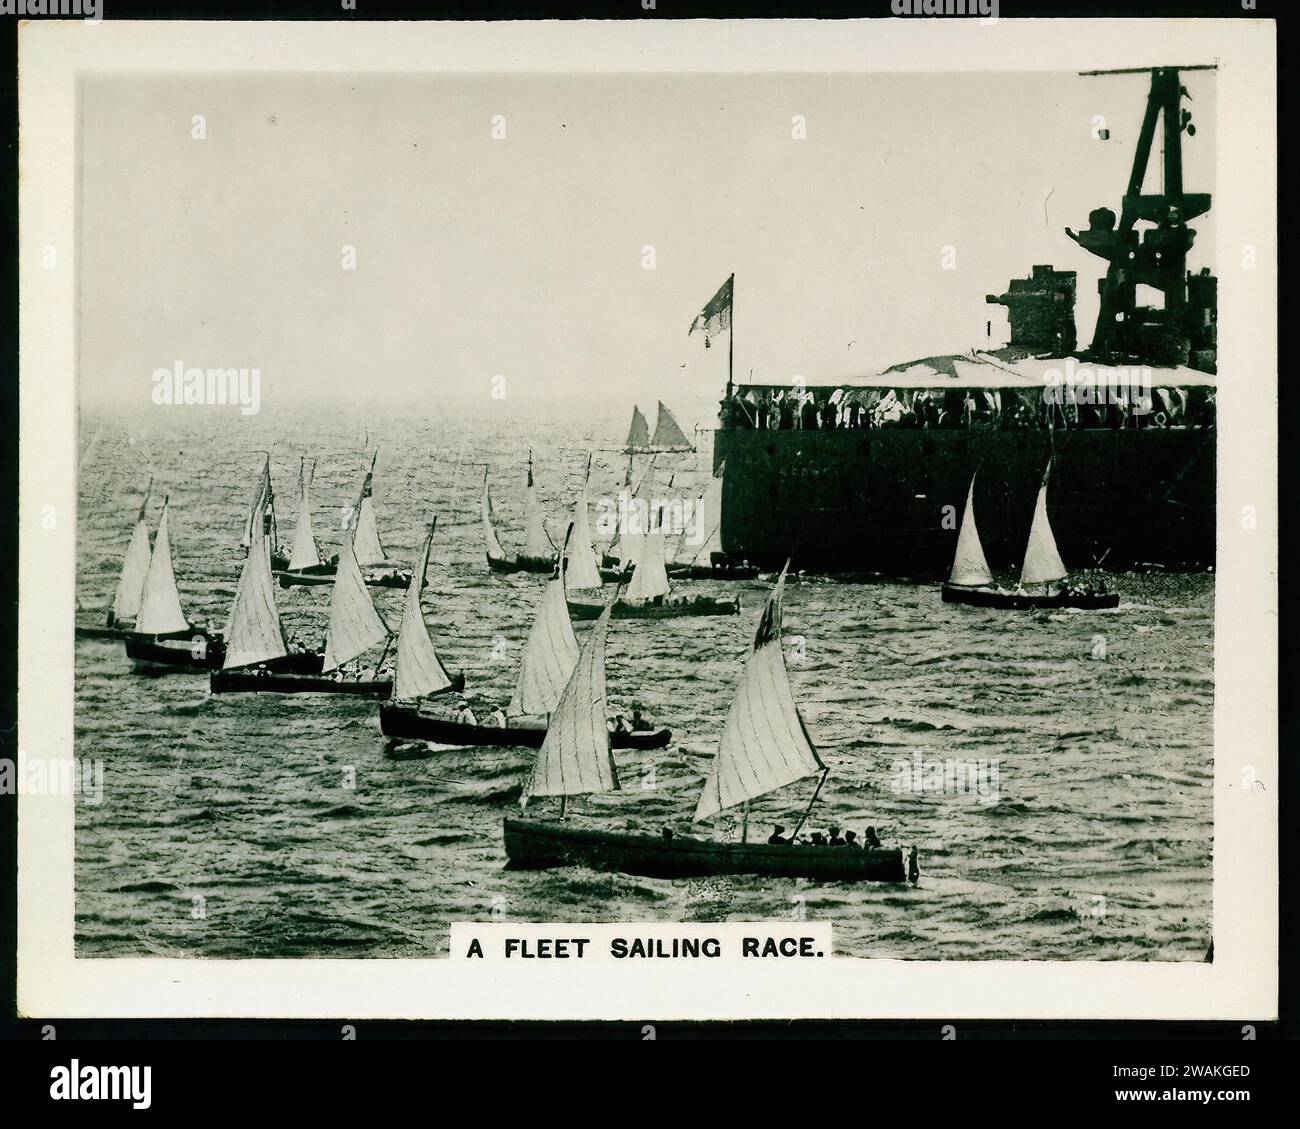 Fleet Sailing Race - Vintage Cigarette Card Illustration Stock Photo